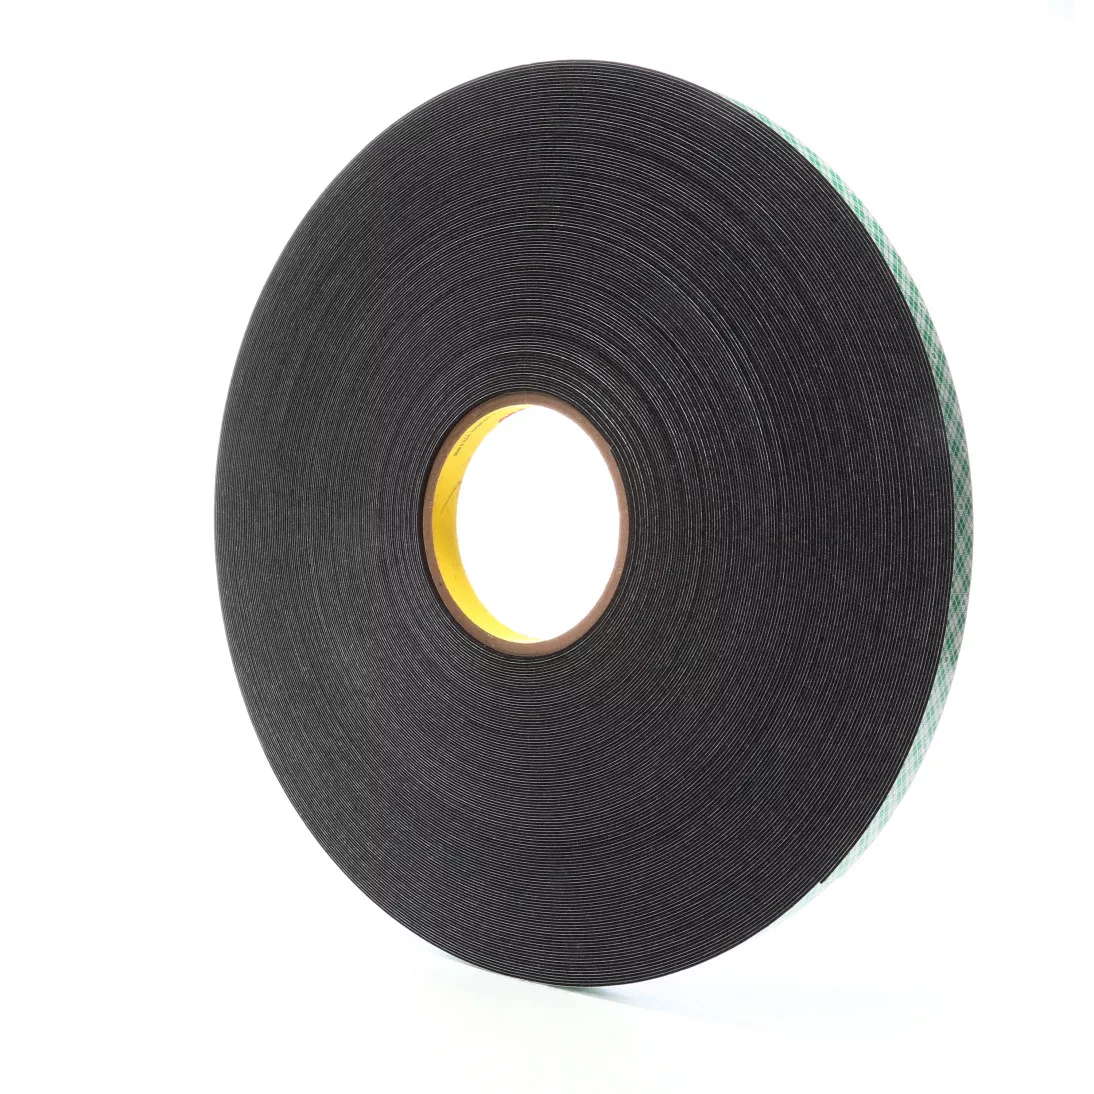 3M™ Double Coated Urethane Foam Tape 4052, Black, 1/2 in x 72 yd, 31
mil, 18 rolls per case